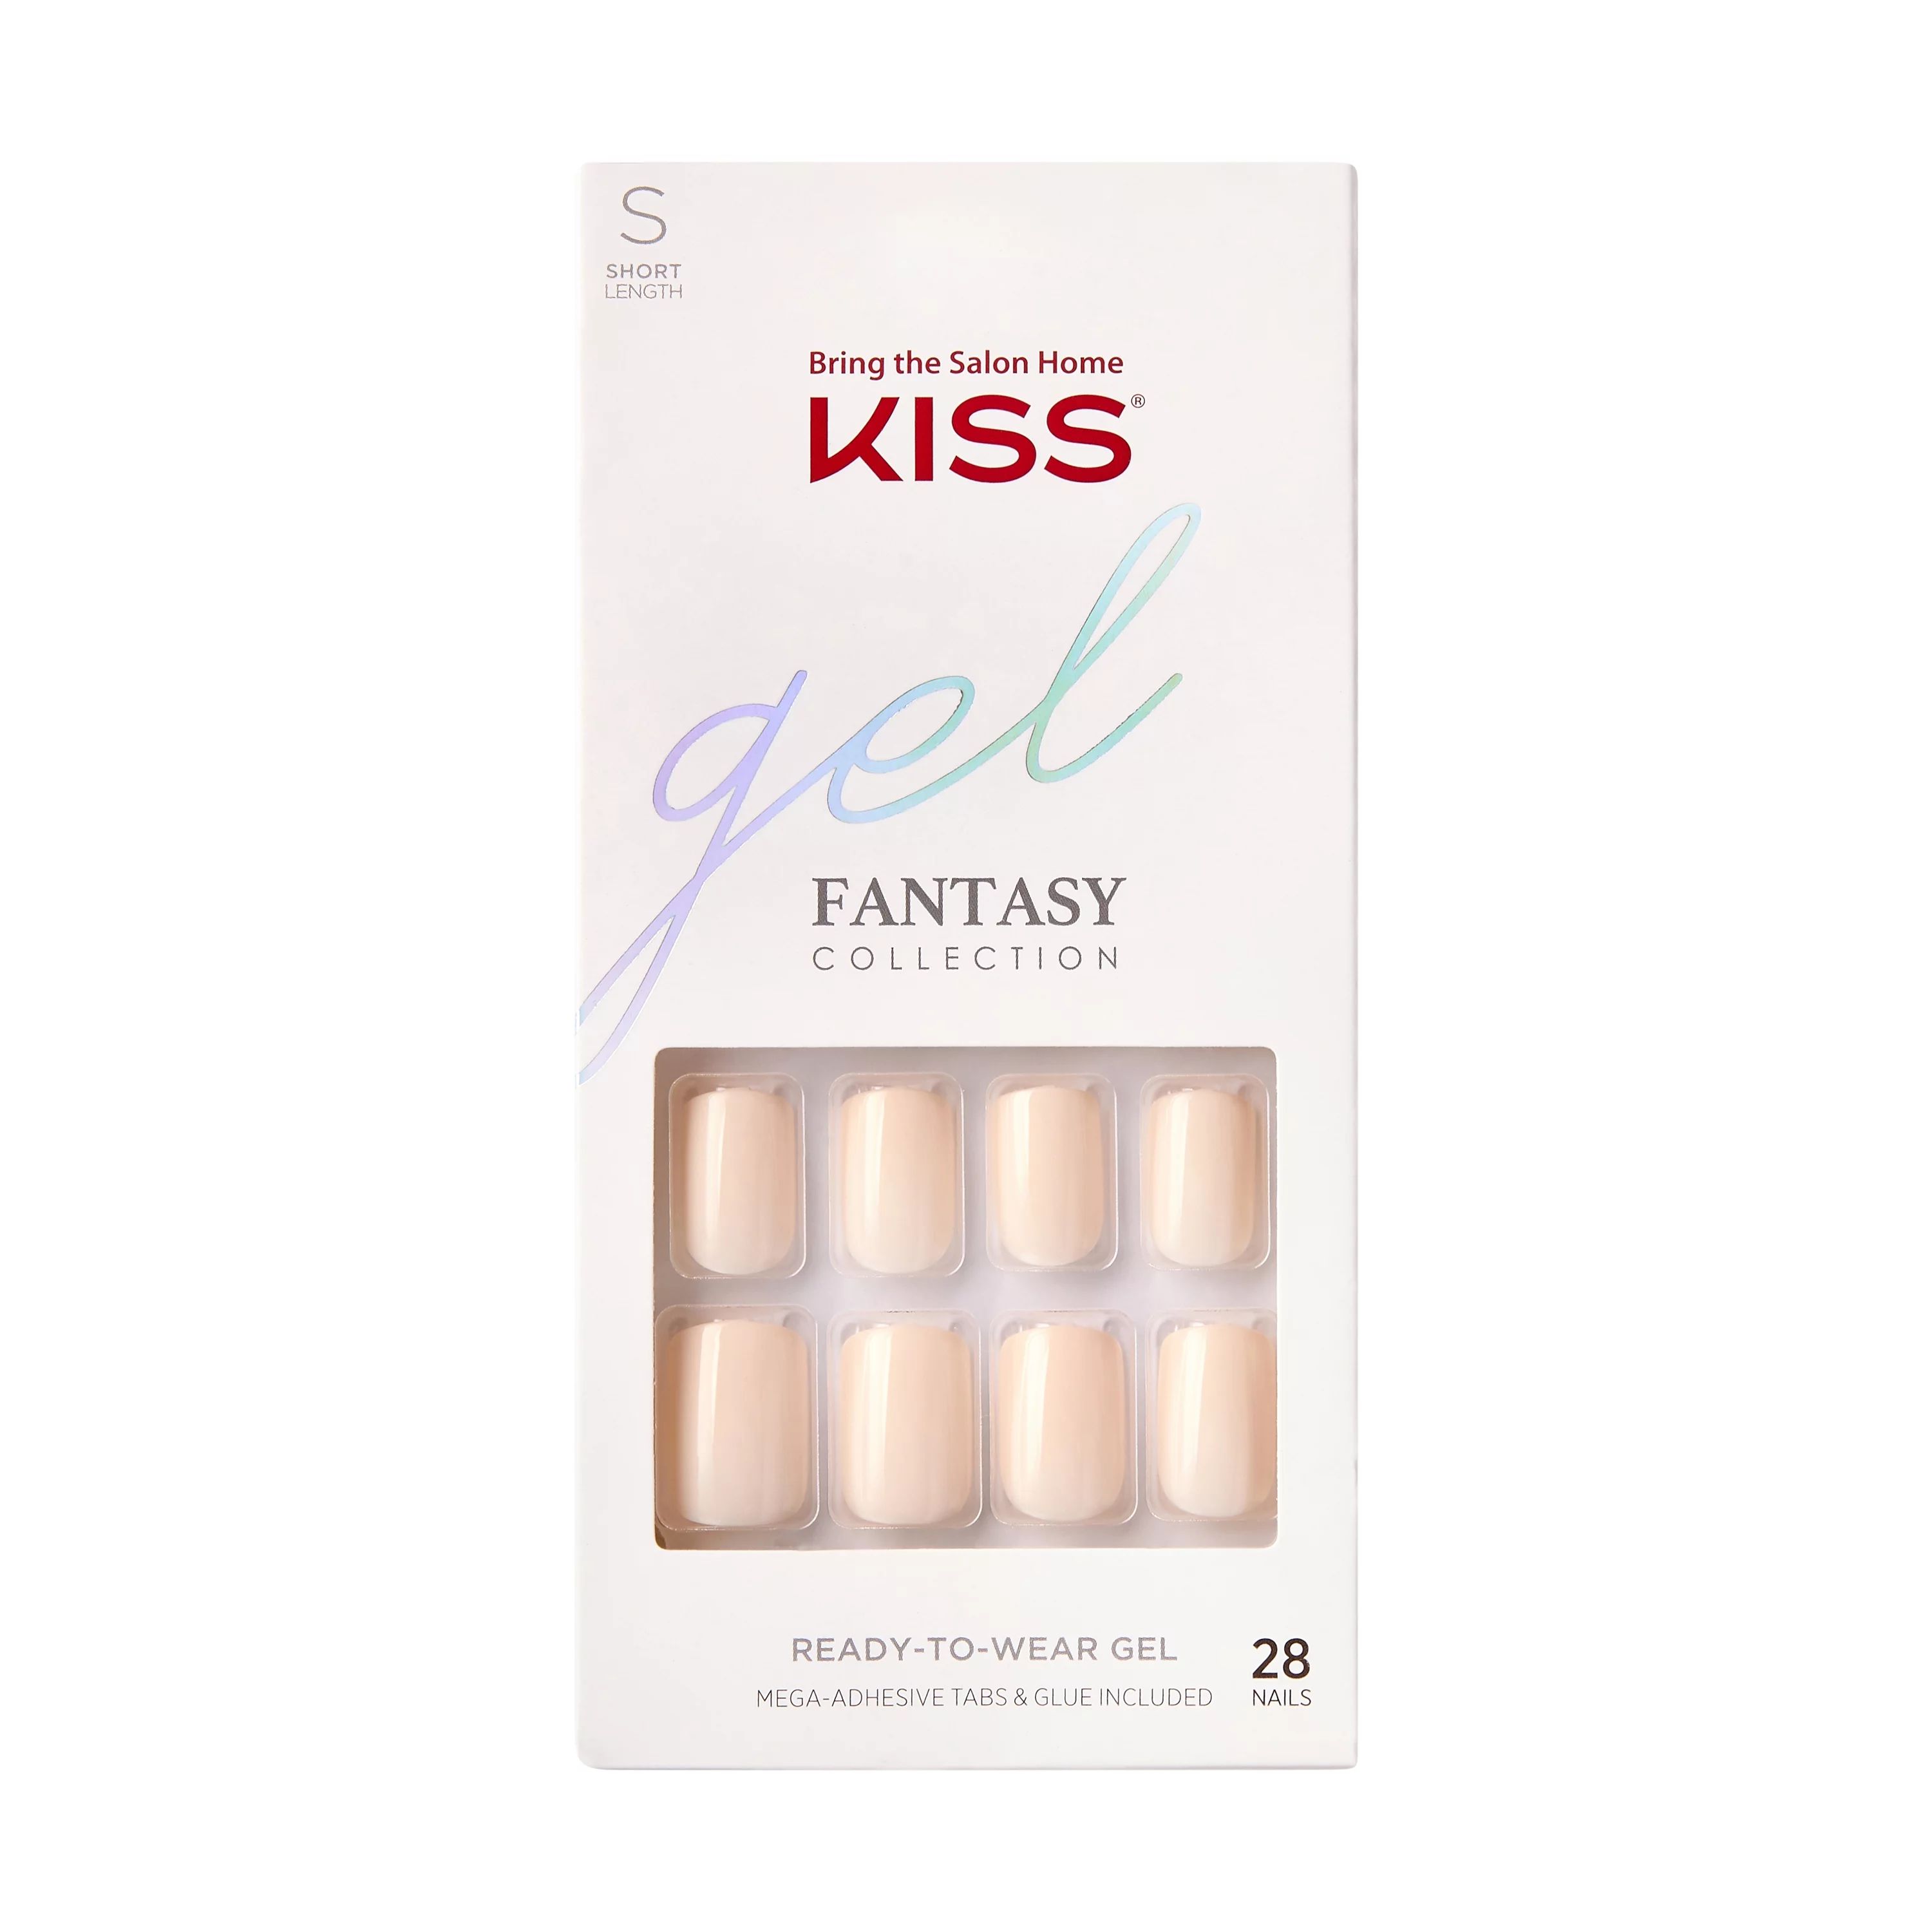 KISS Gel Fantasy Ready-to-Wear Fake Nails, ‘If you care enough’, 28 Count - Walmart.com | Walmart (US)